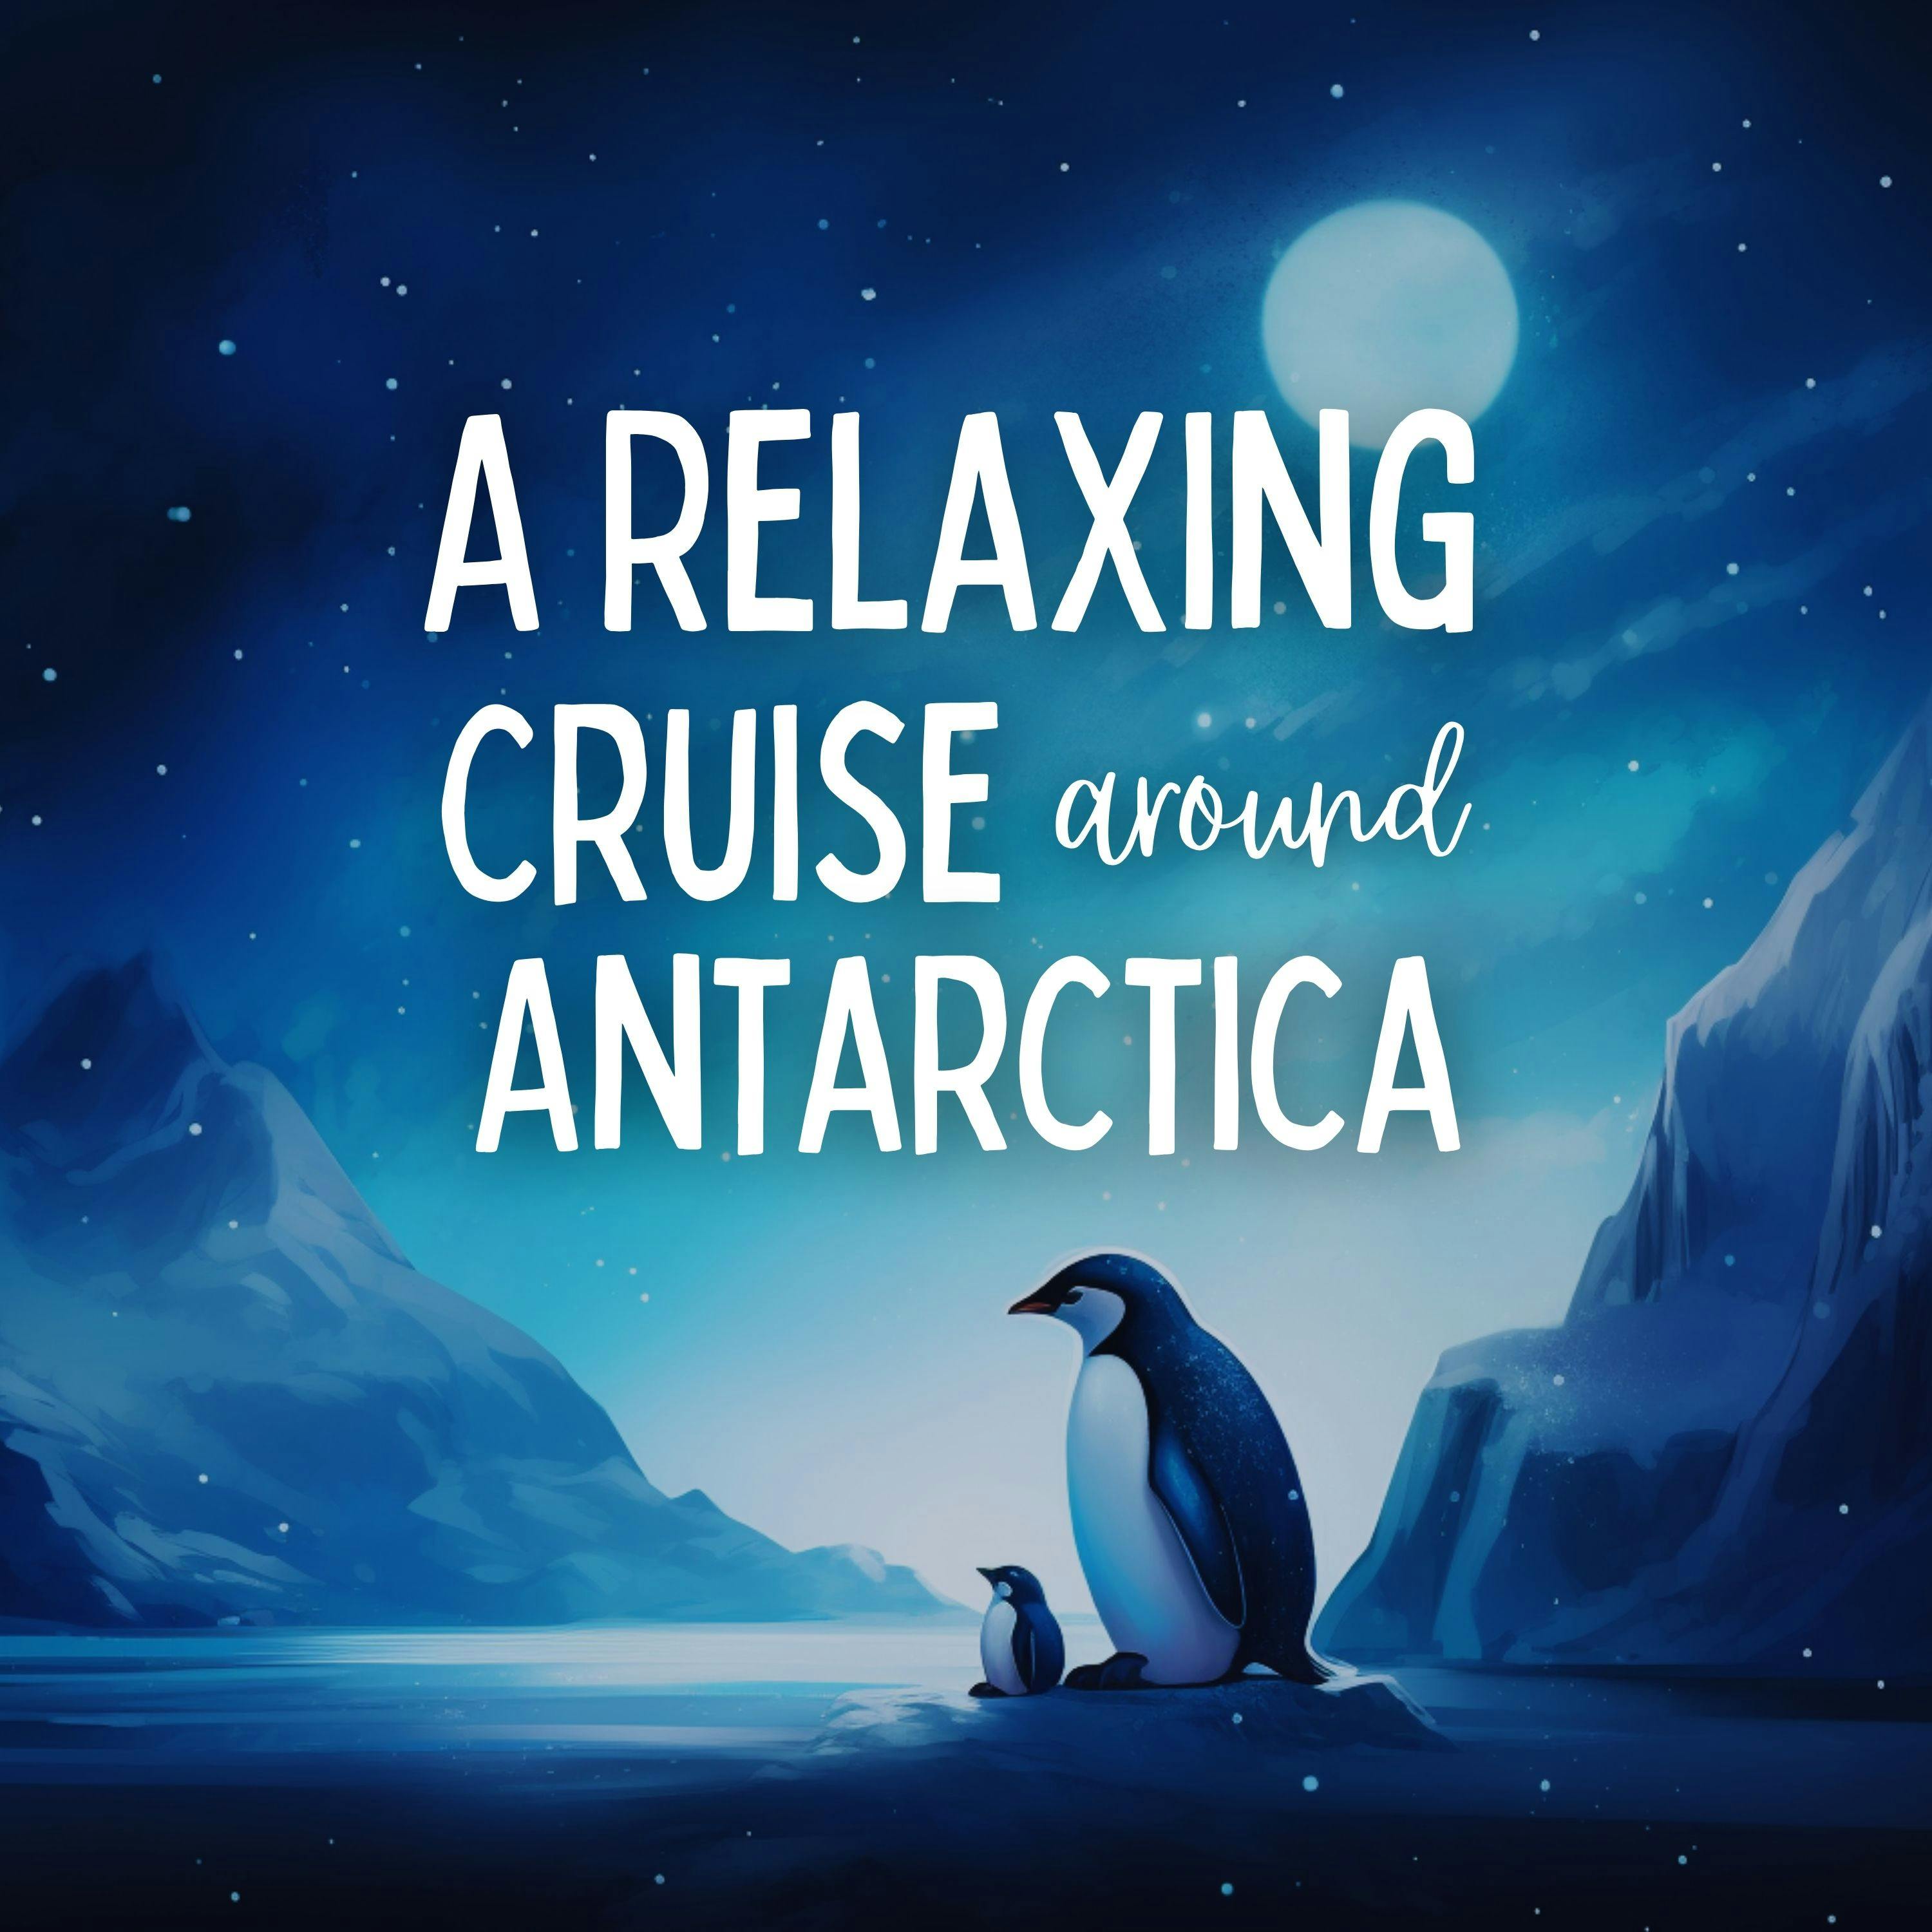 A Relaxing Cruise around Antarctica